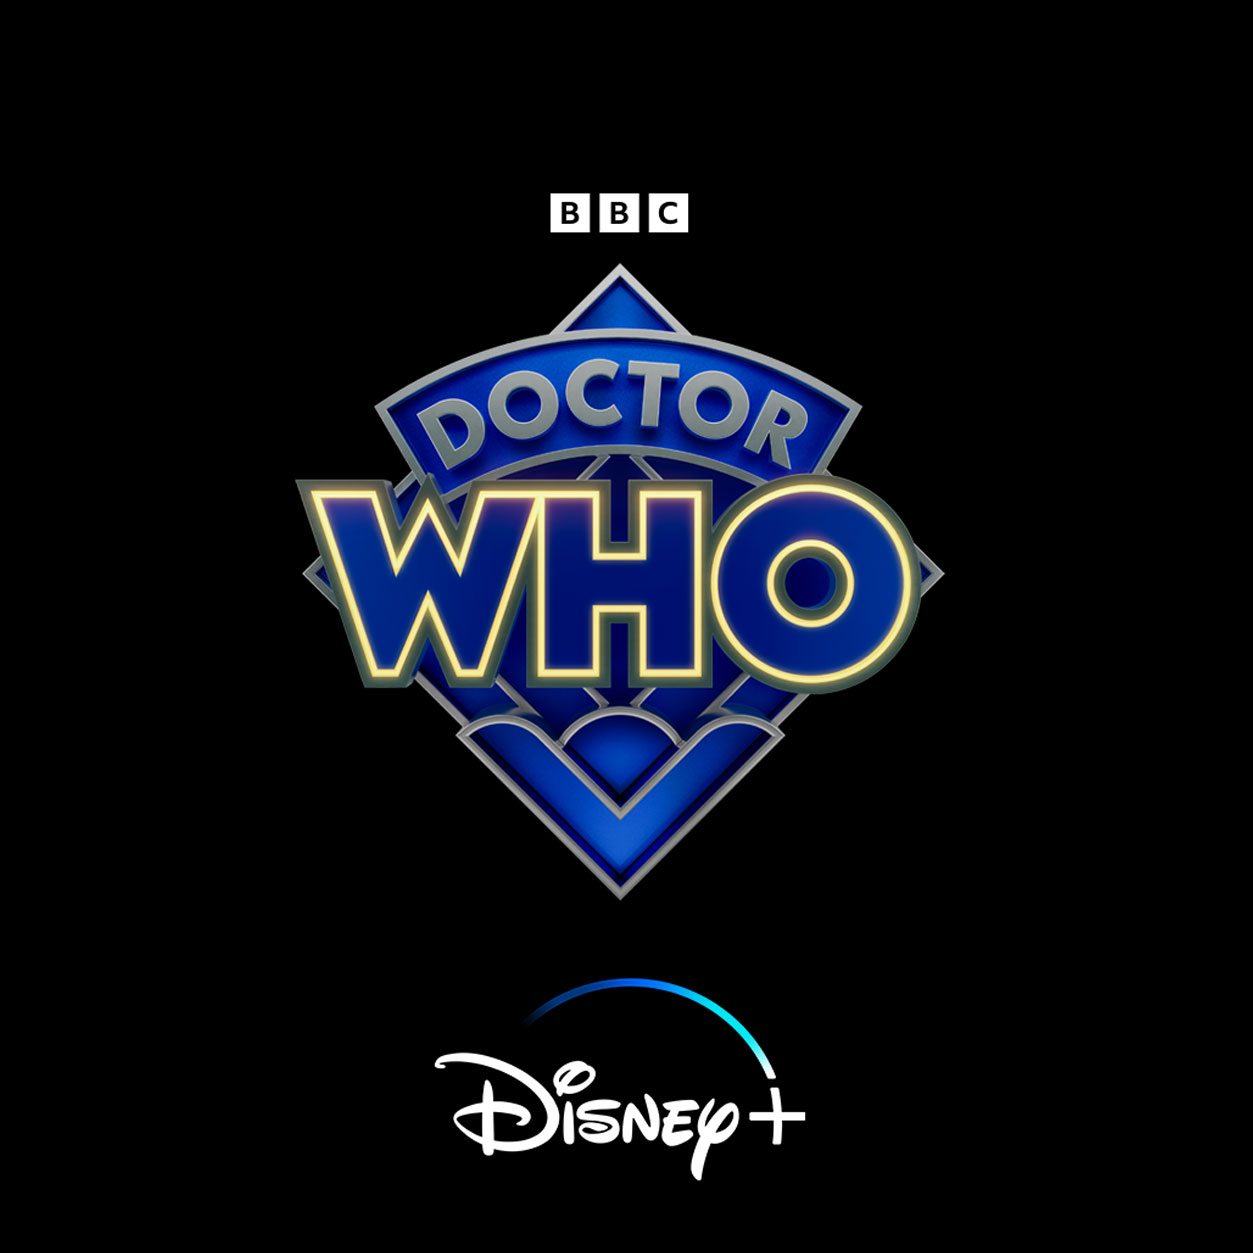 Doctor Who logo Disney+